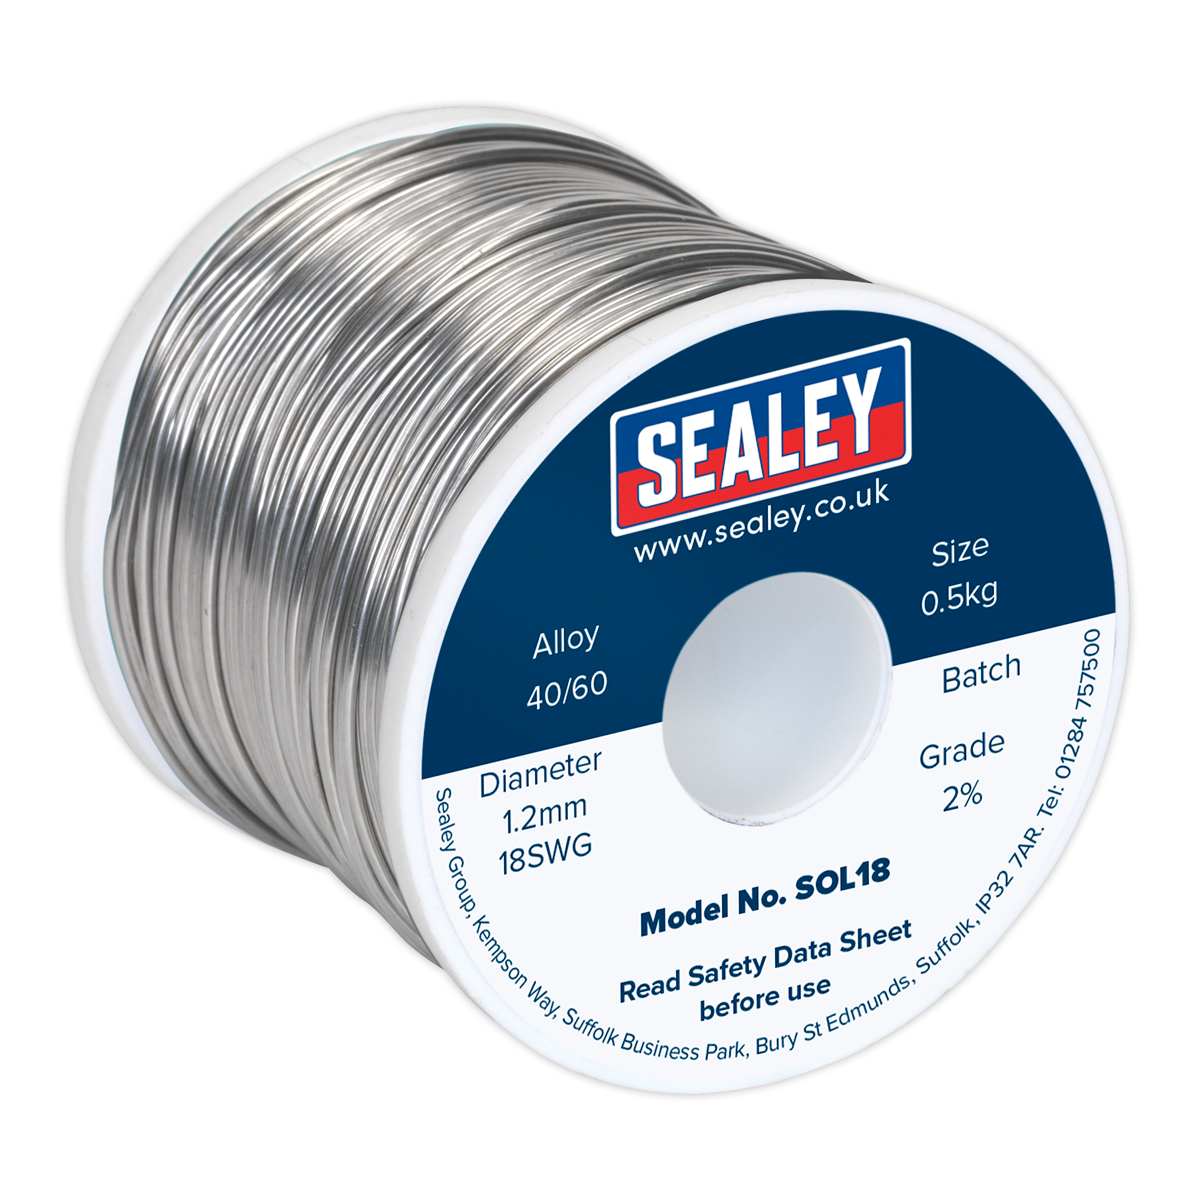 Sealey Solder Wire Quick Flow 1.2mm/18SWG 40/60 0.5kg Reel